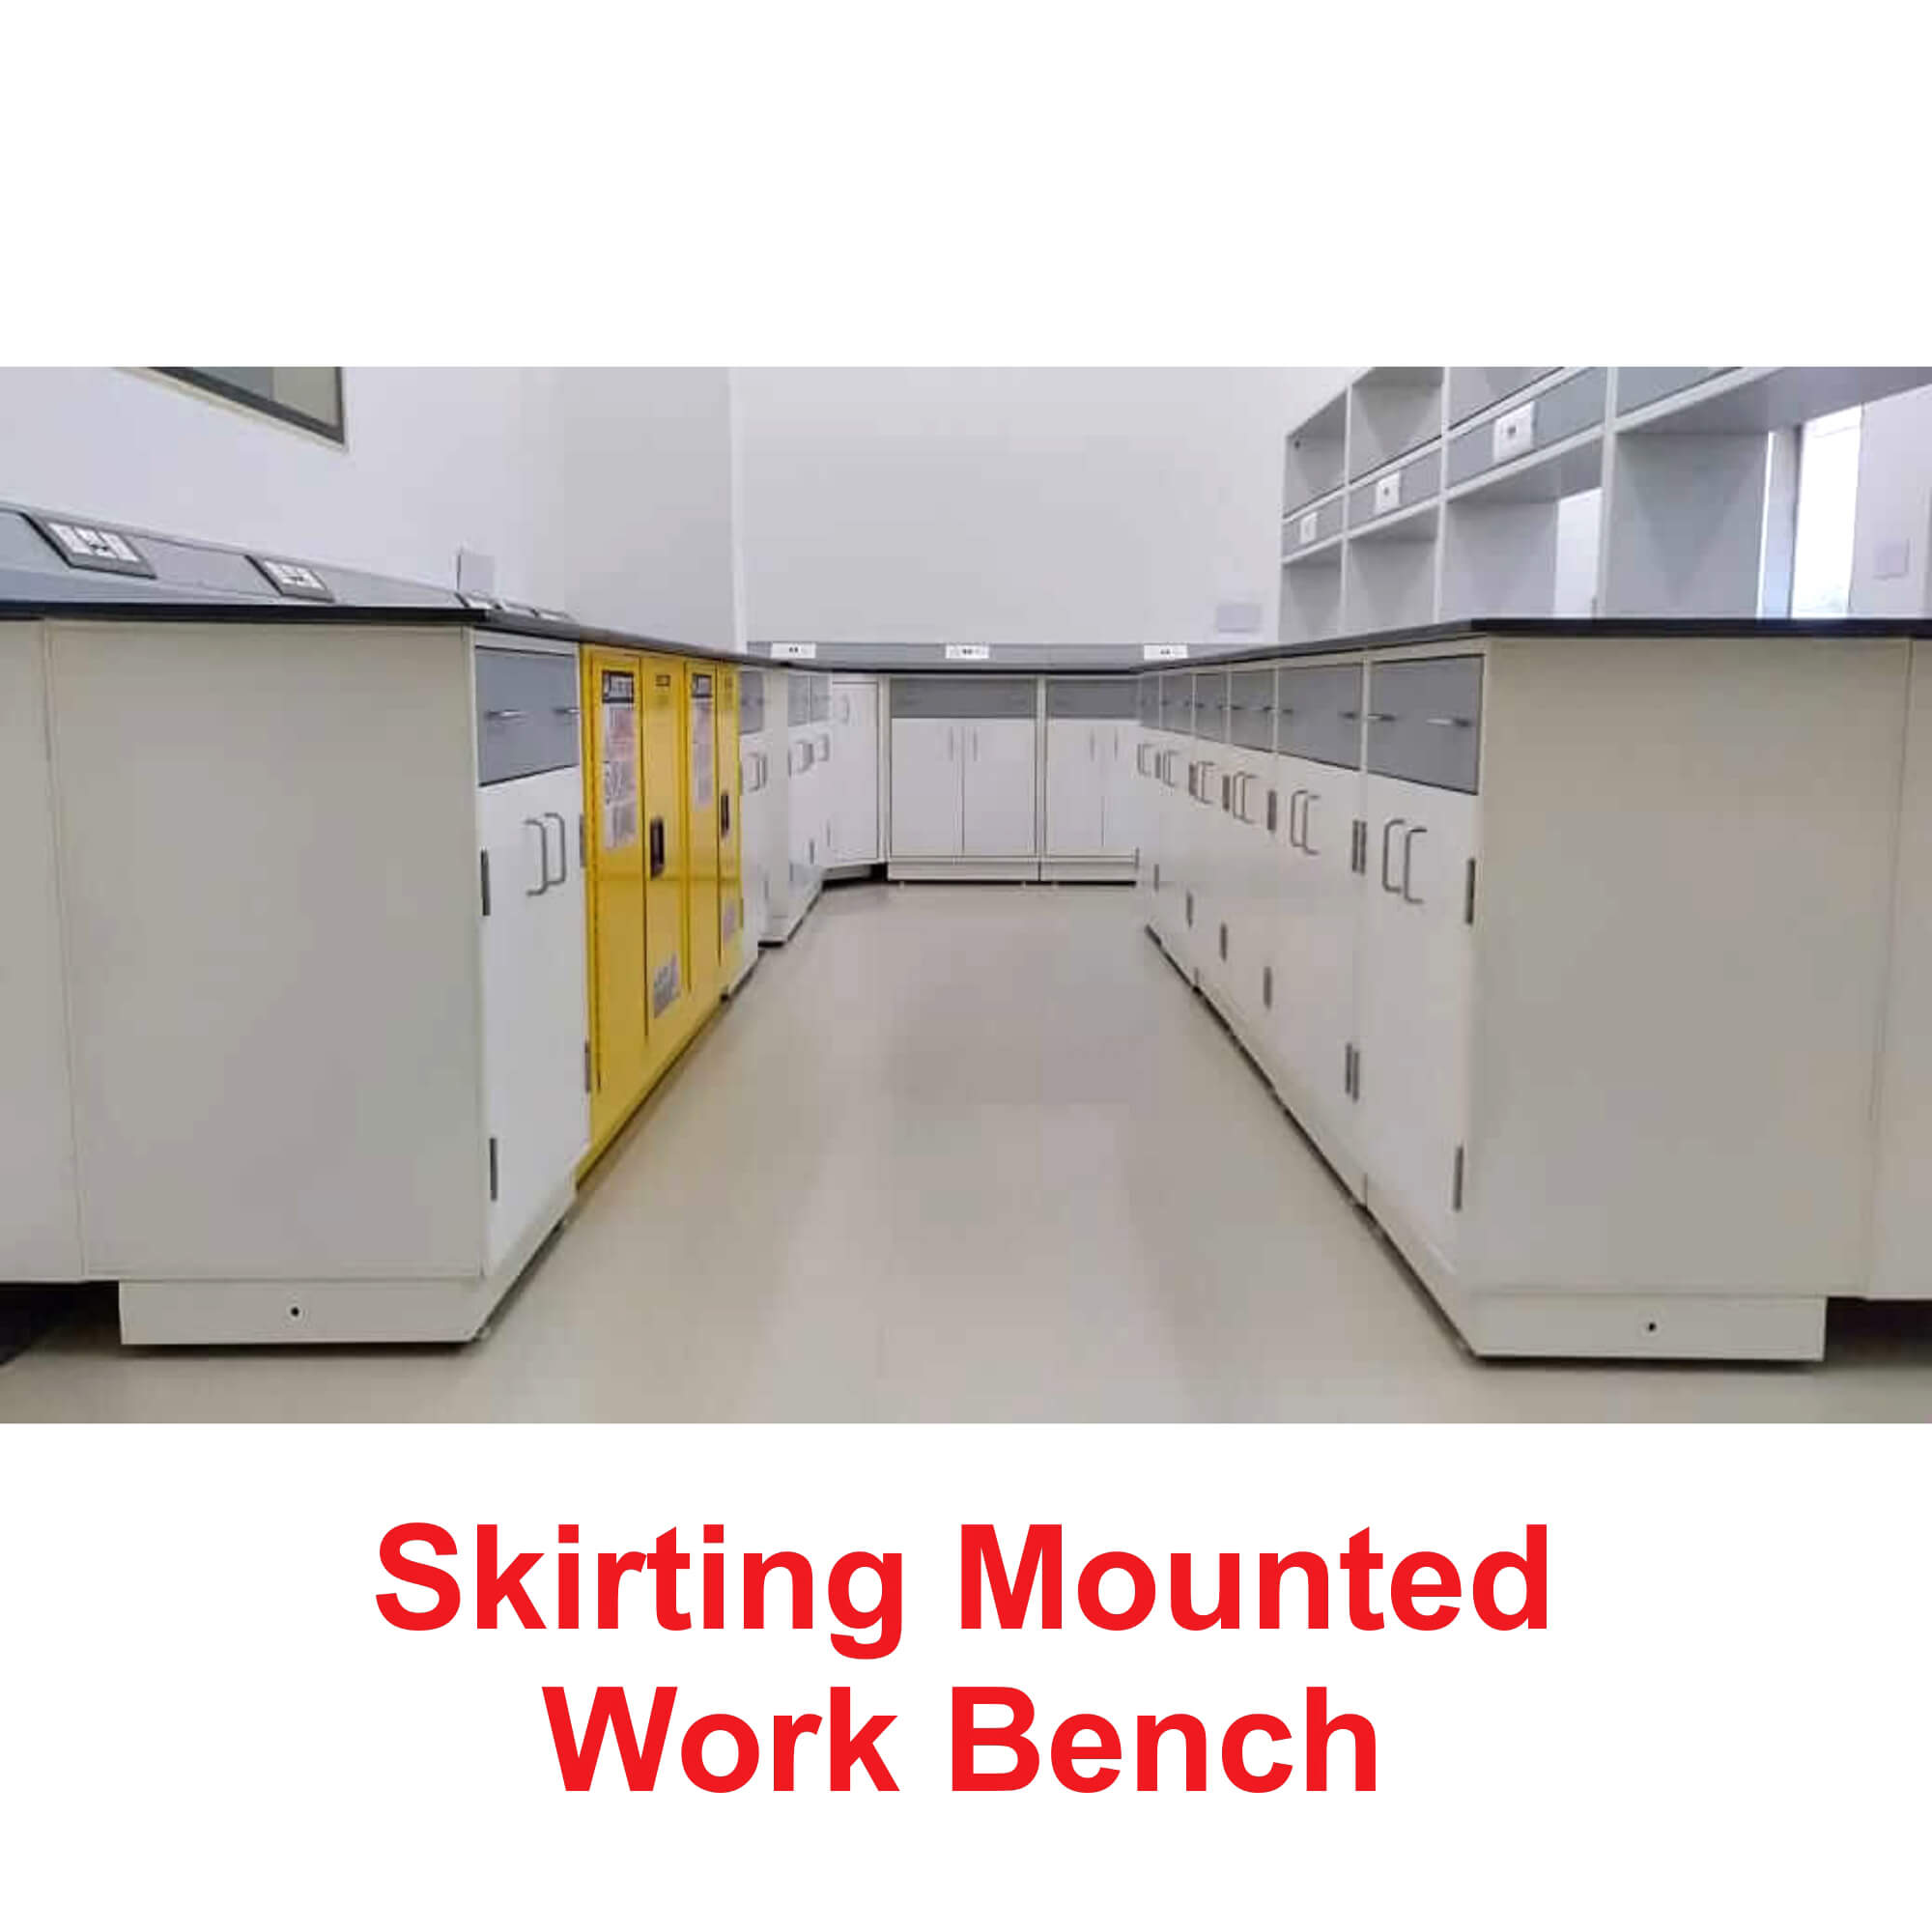 Skirting Mounted Work Bench Manufacturer in India